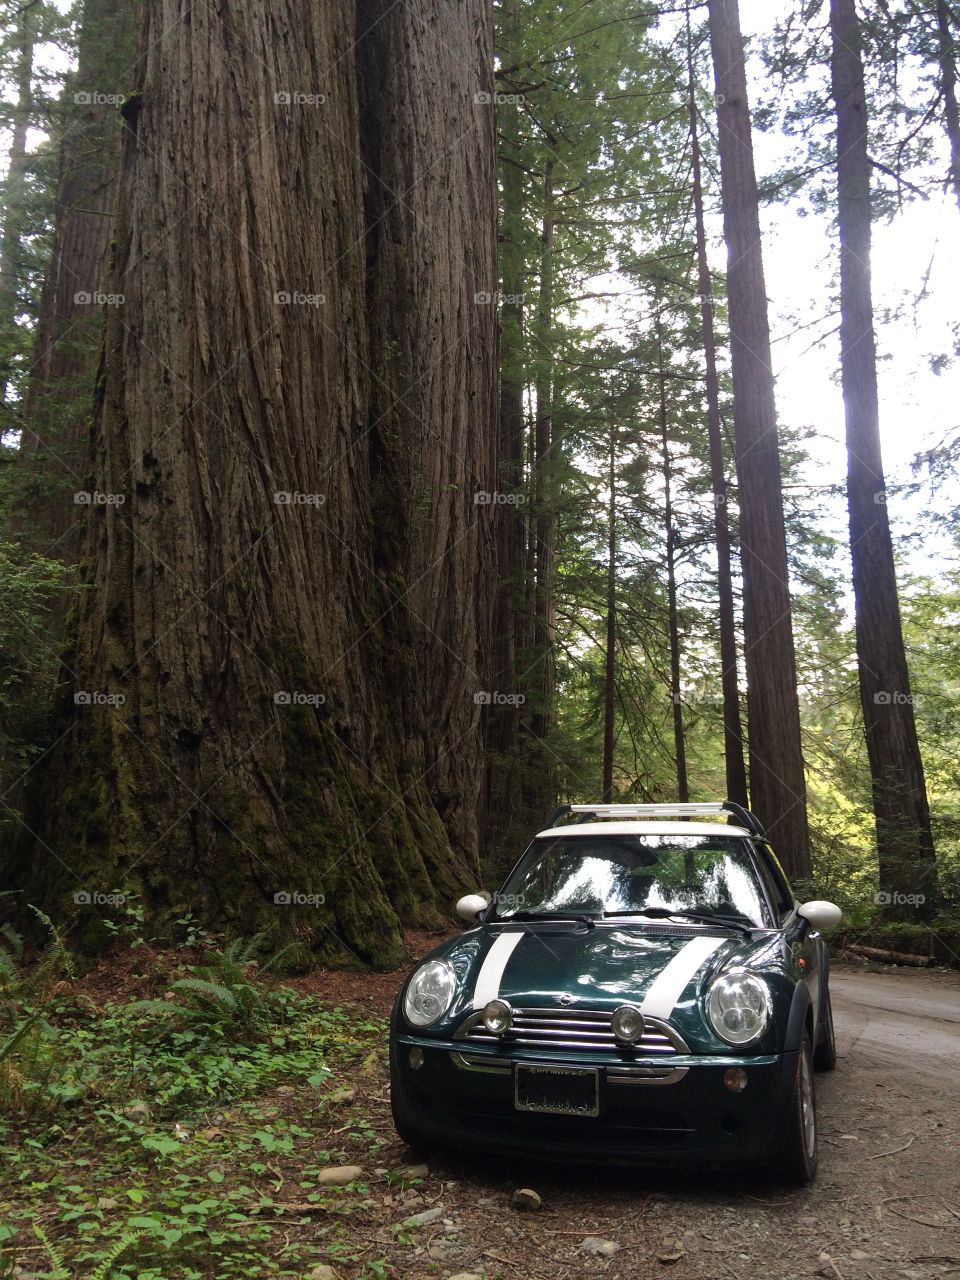 Little car, big tree